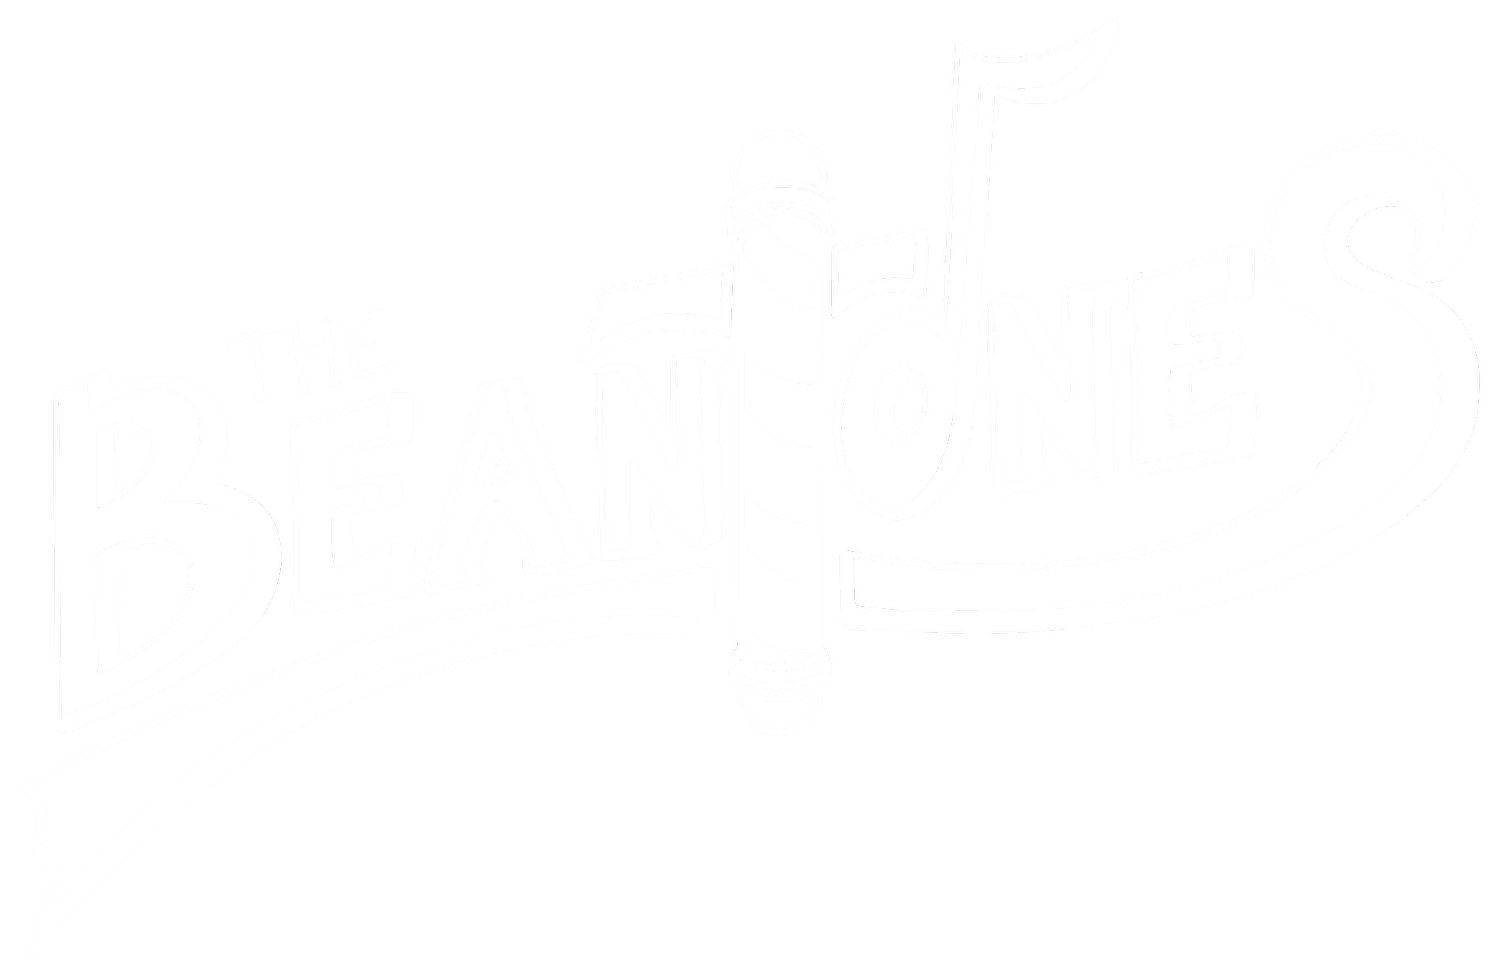 The Bean Tones